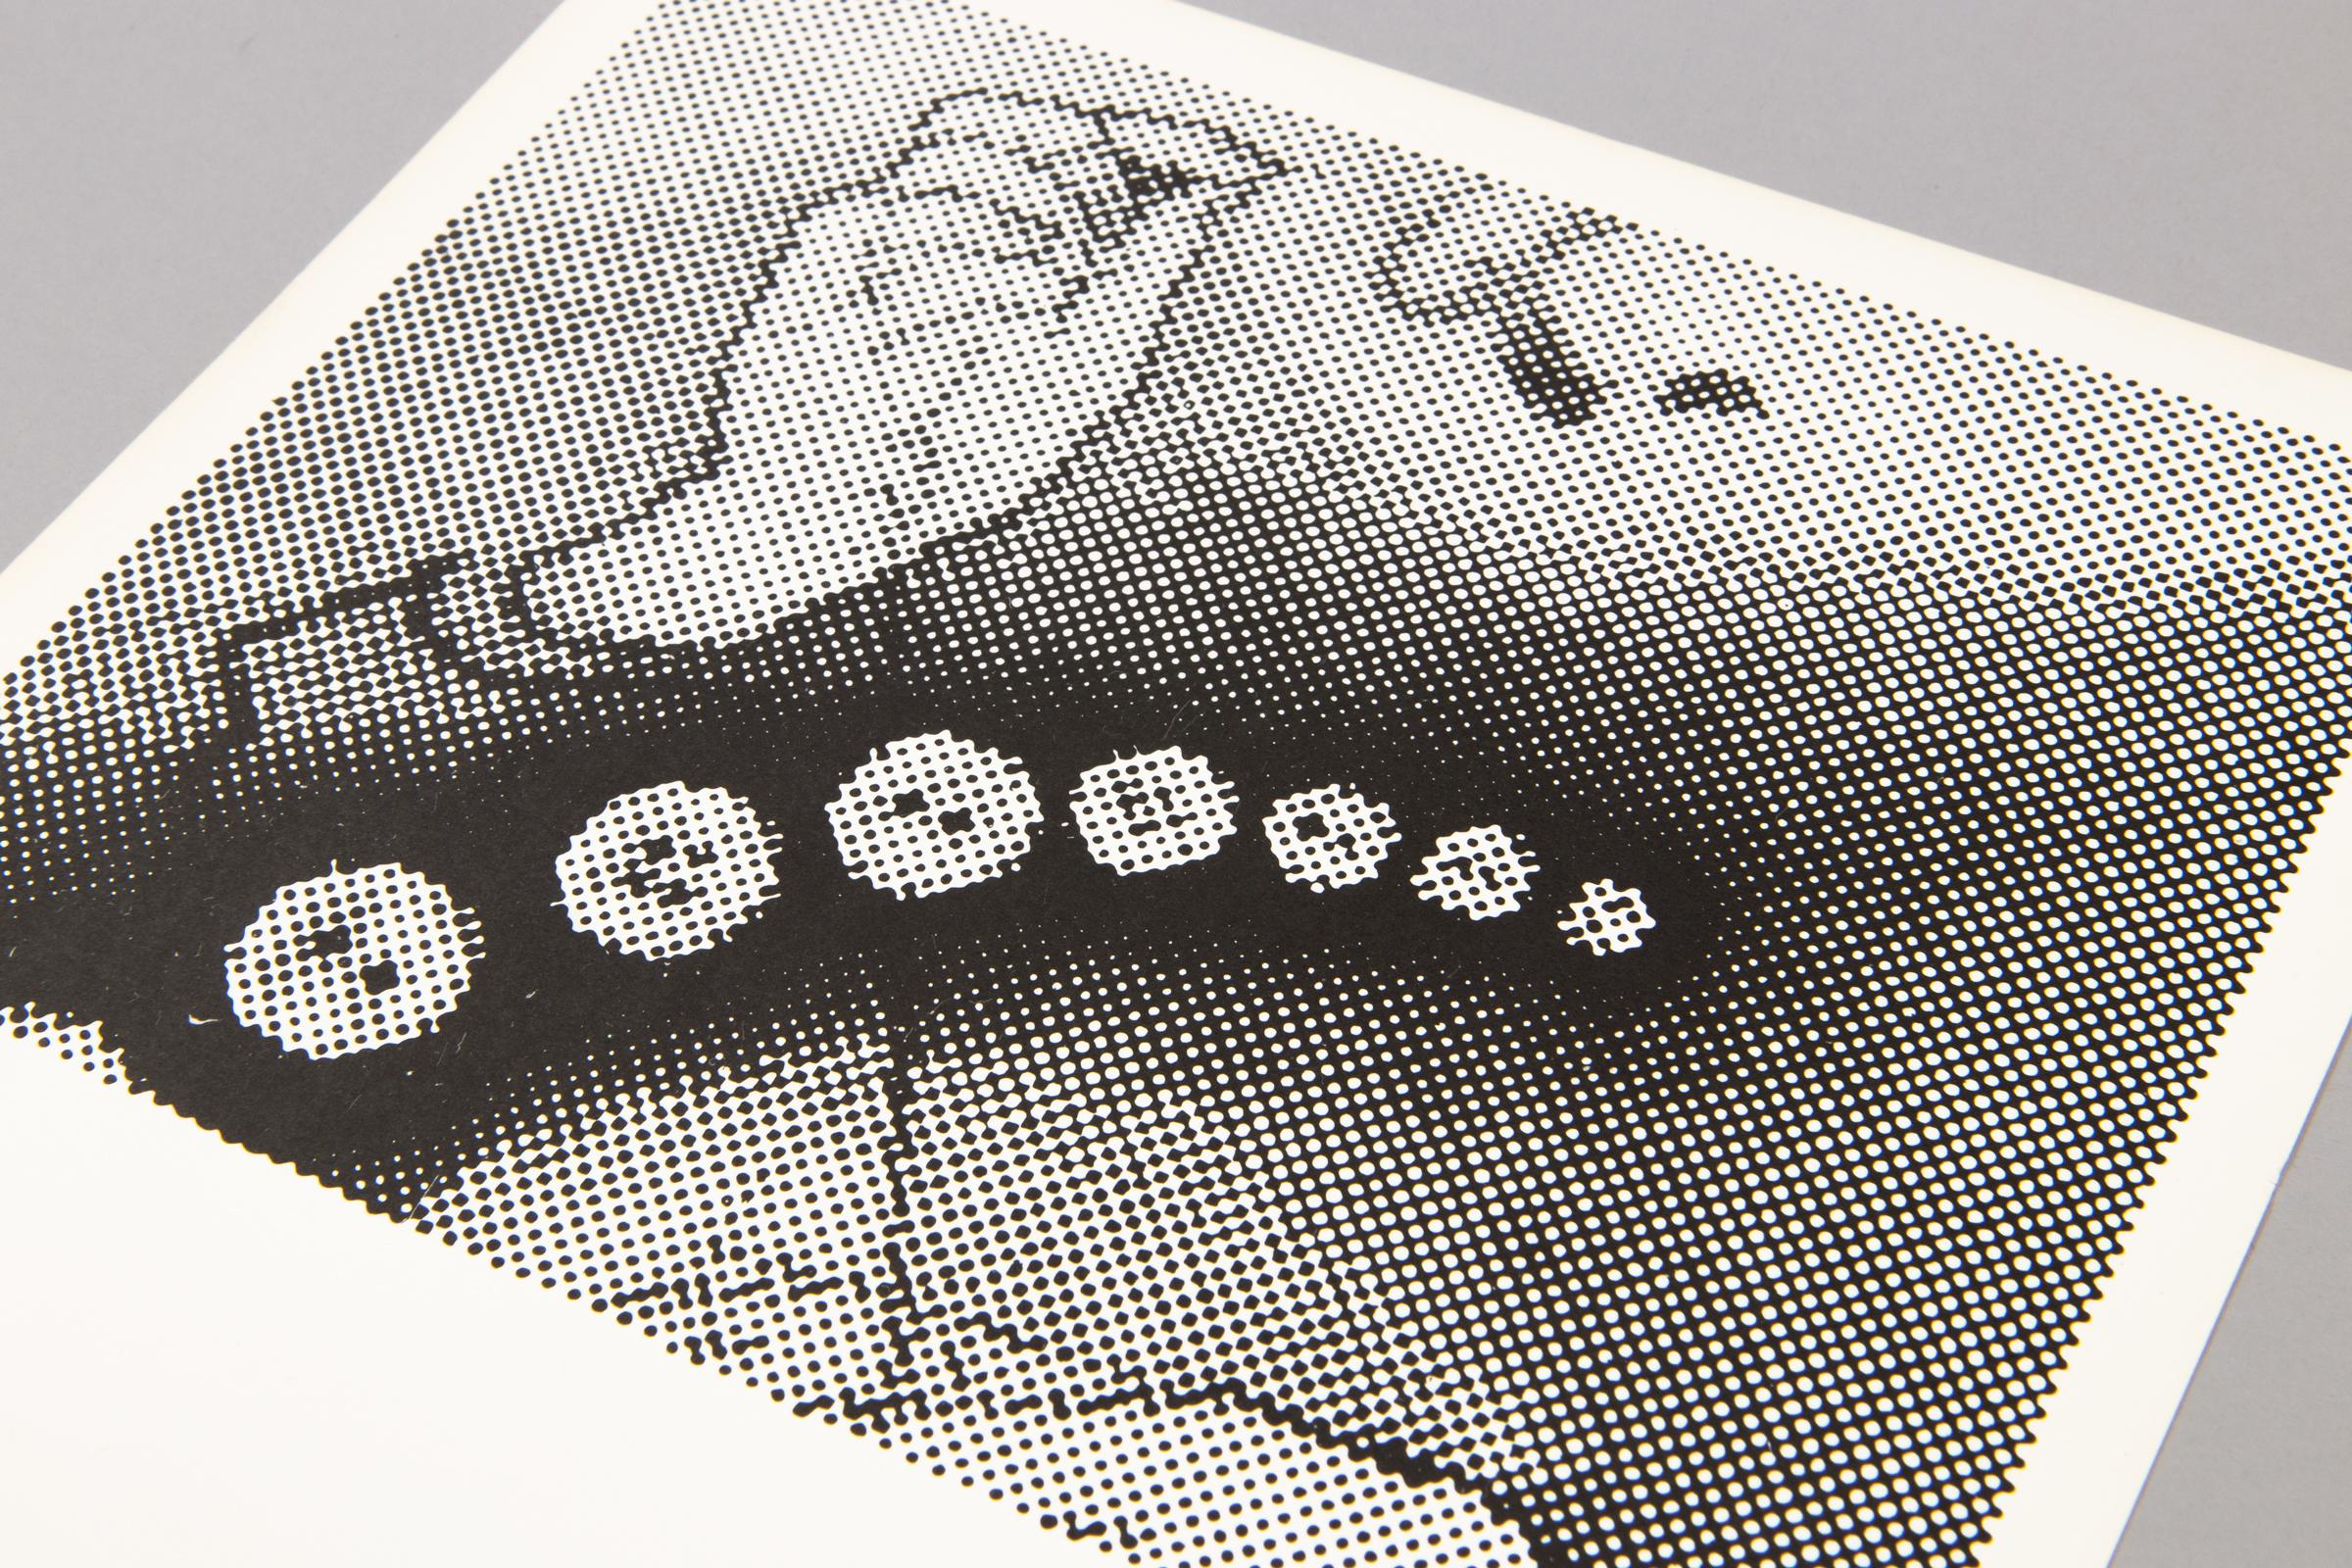 Sigmar Polke, Oelbild (Näherin - Limited Edition, German Pop Art, Original Print 1